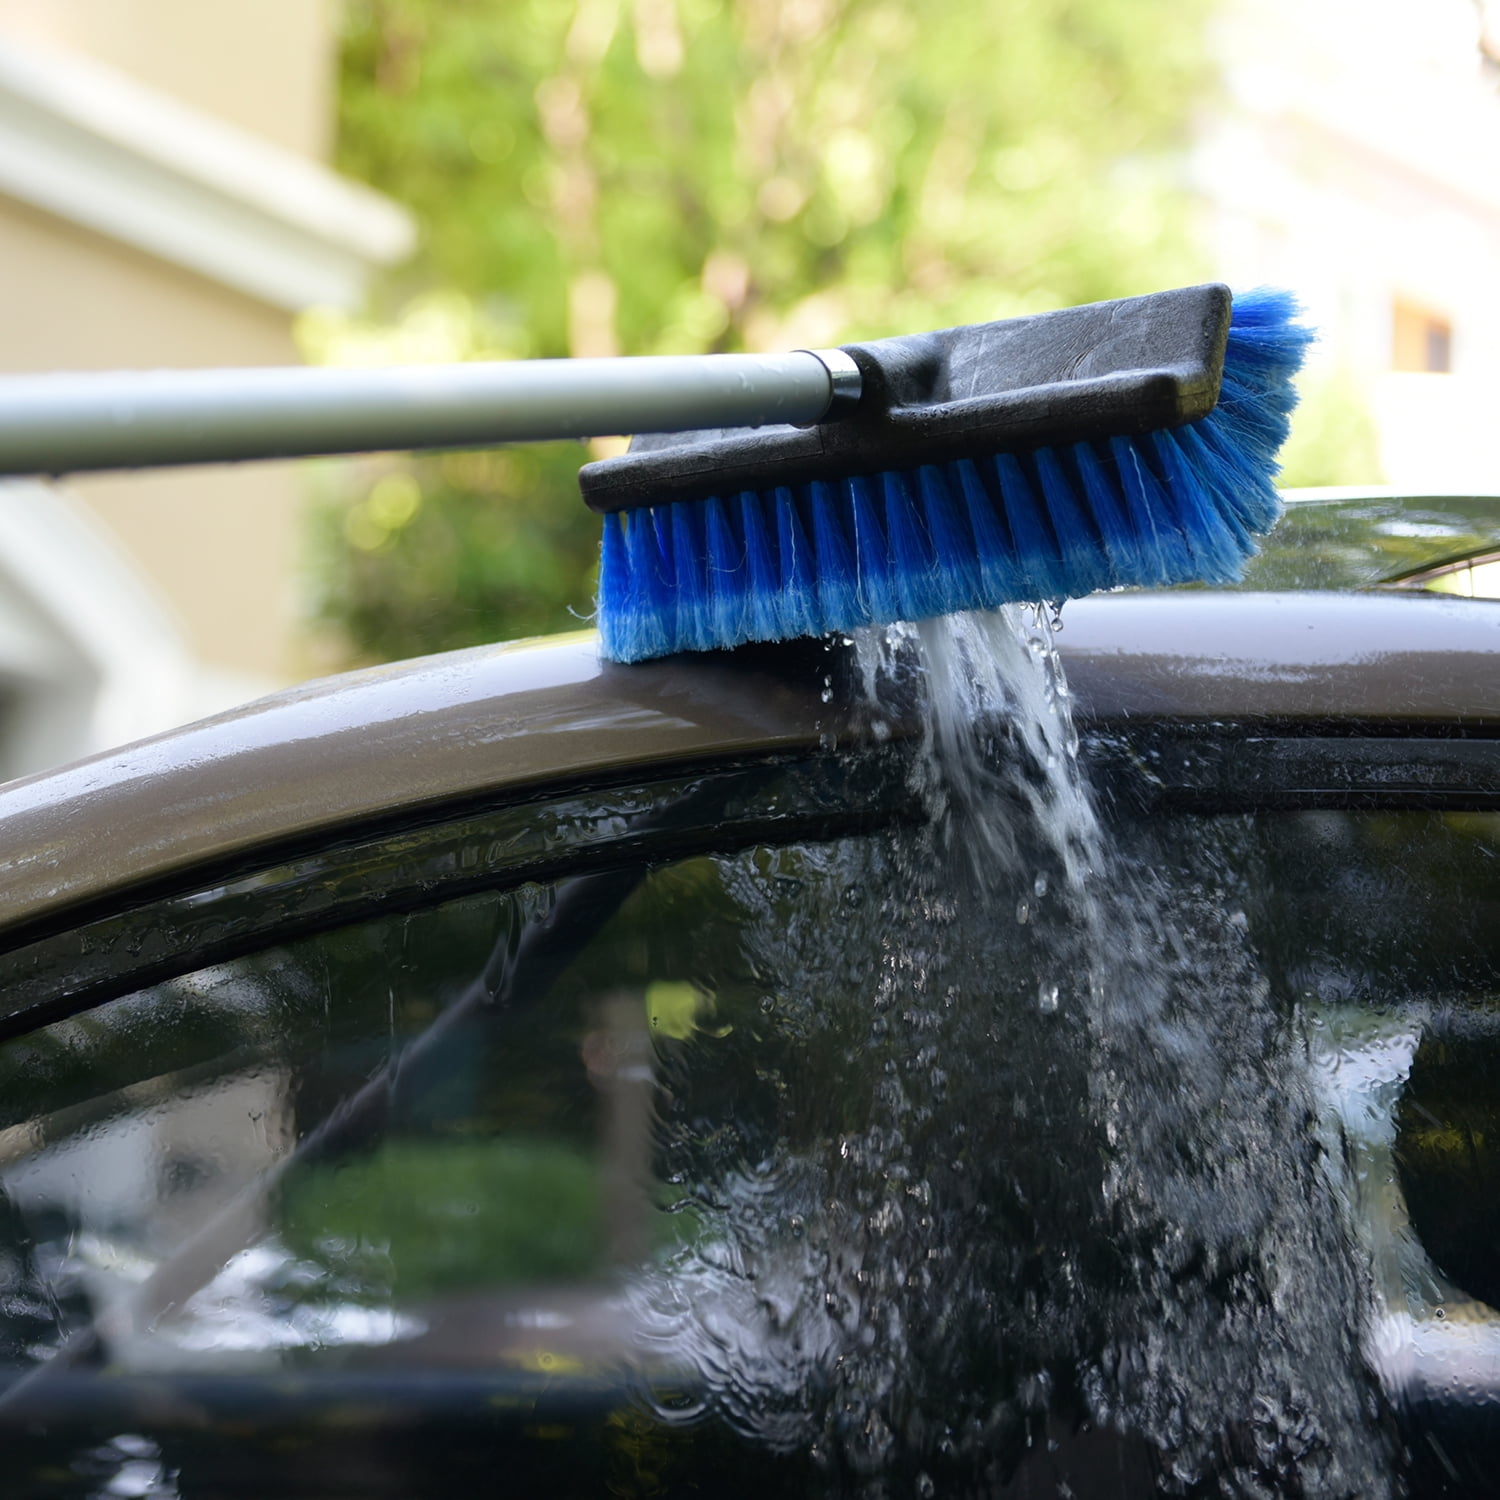 MEEJIE 10.8 Flow-Thru Soft Car Wash Brush Head for Auto Cars RV SUV Deck  Truck Boat House Siding Camper Exterior Washing Cleaing Floors, Blue